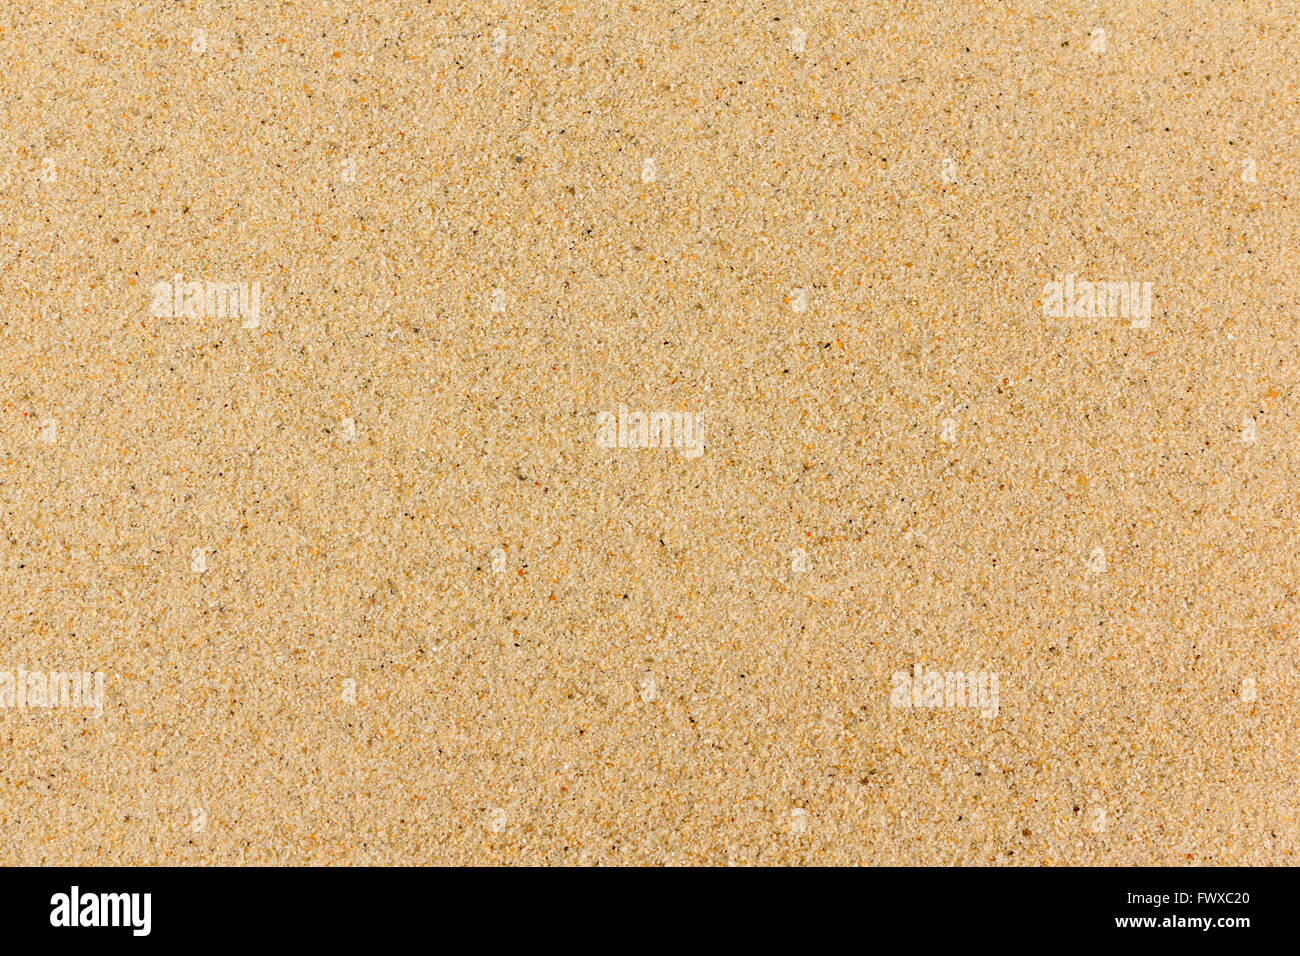 Macro of dry sand Stock Photo